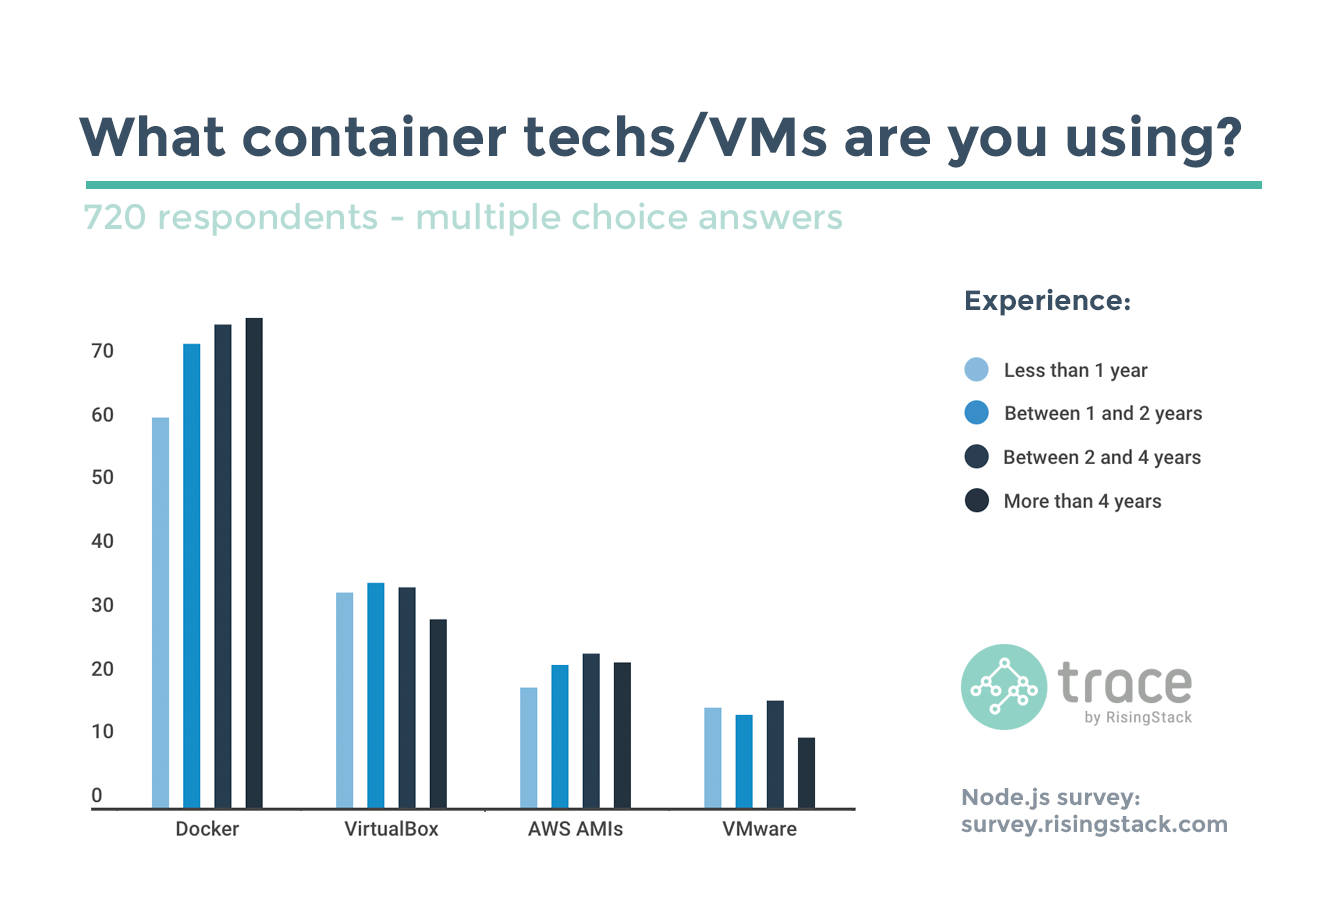 Node.js Survey - Container techs and developer experience.